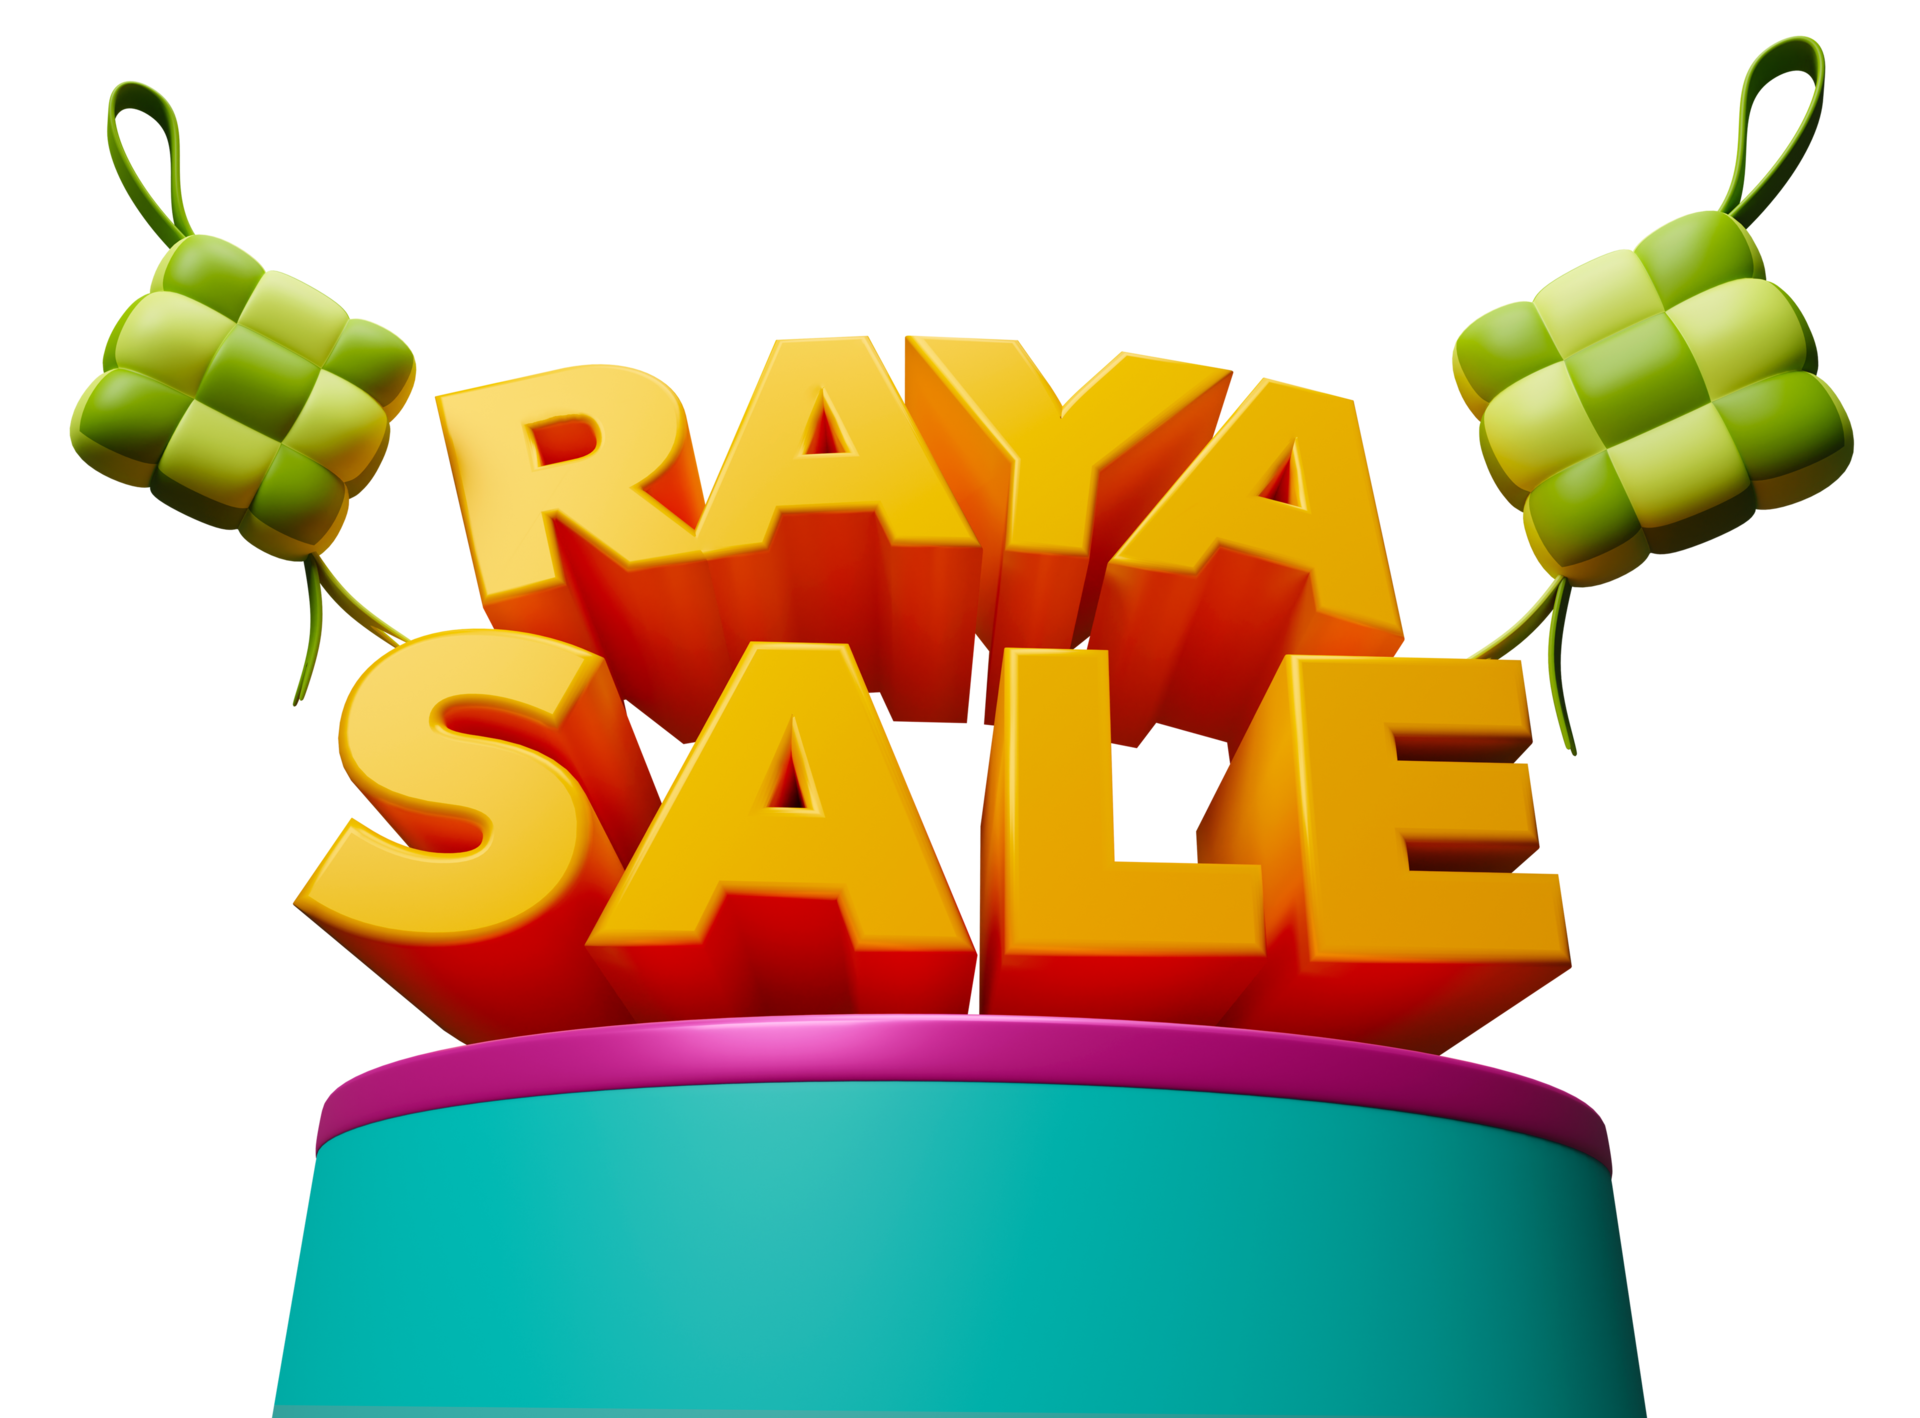 Raya sale sign with 2 ketupat icon floating on podium pedestal for